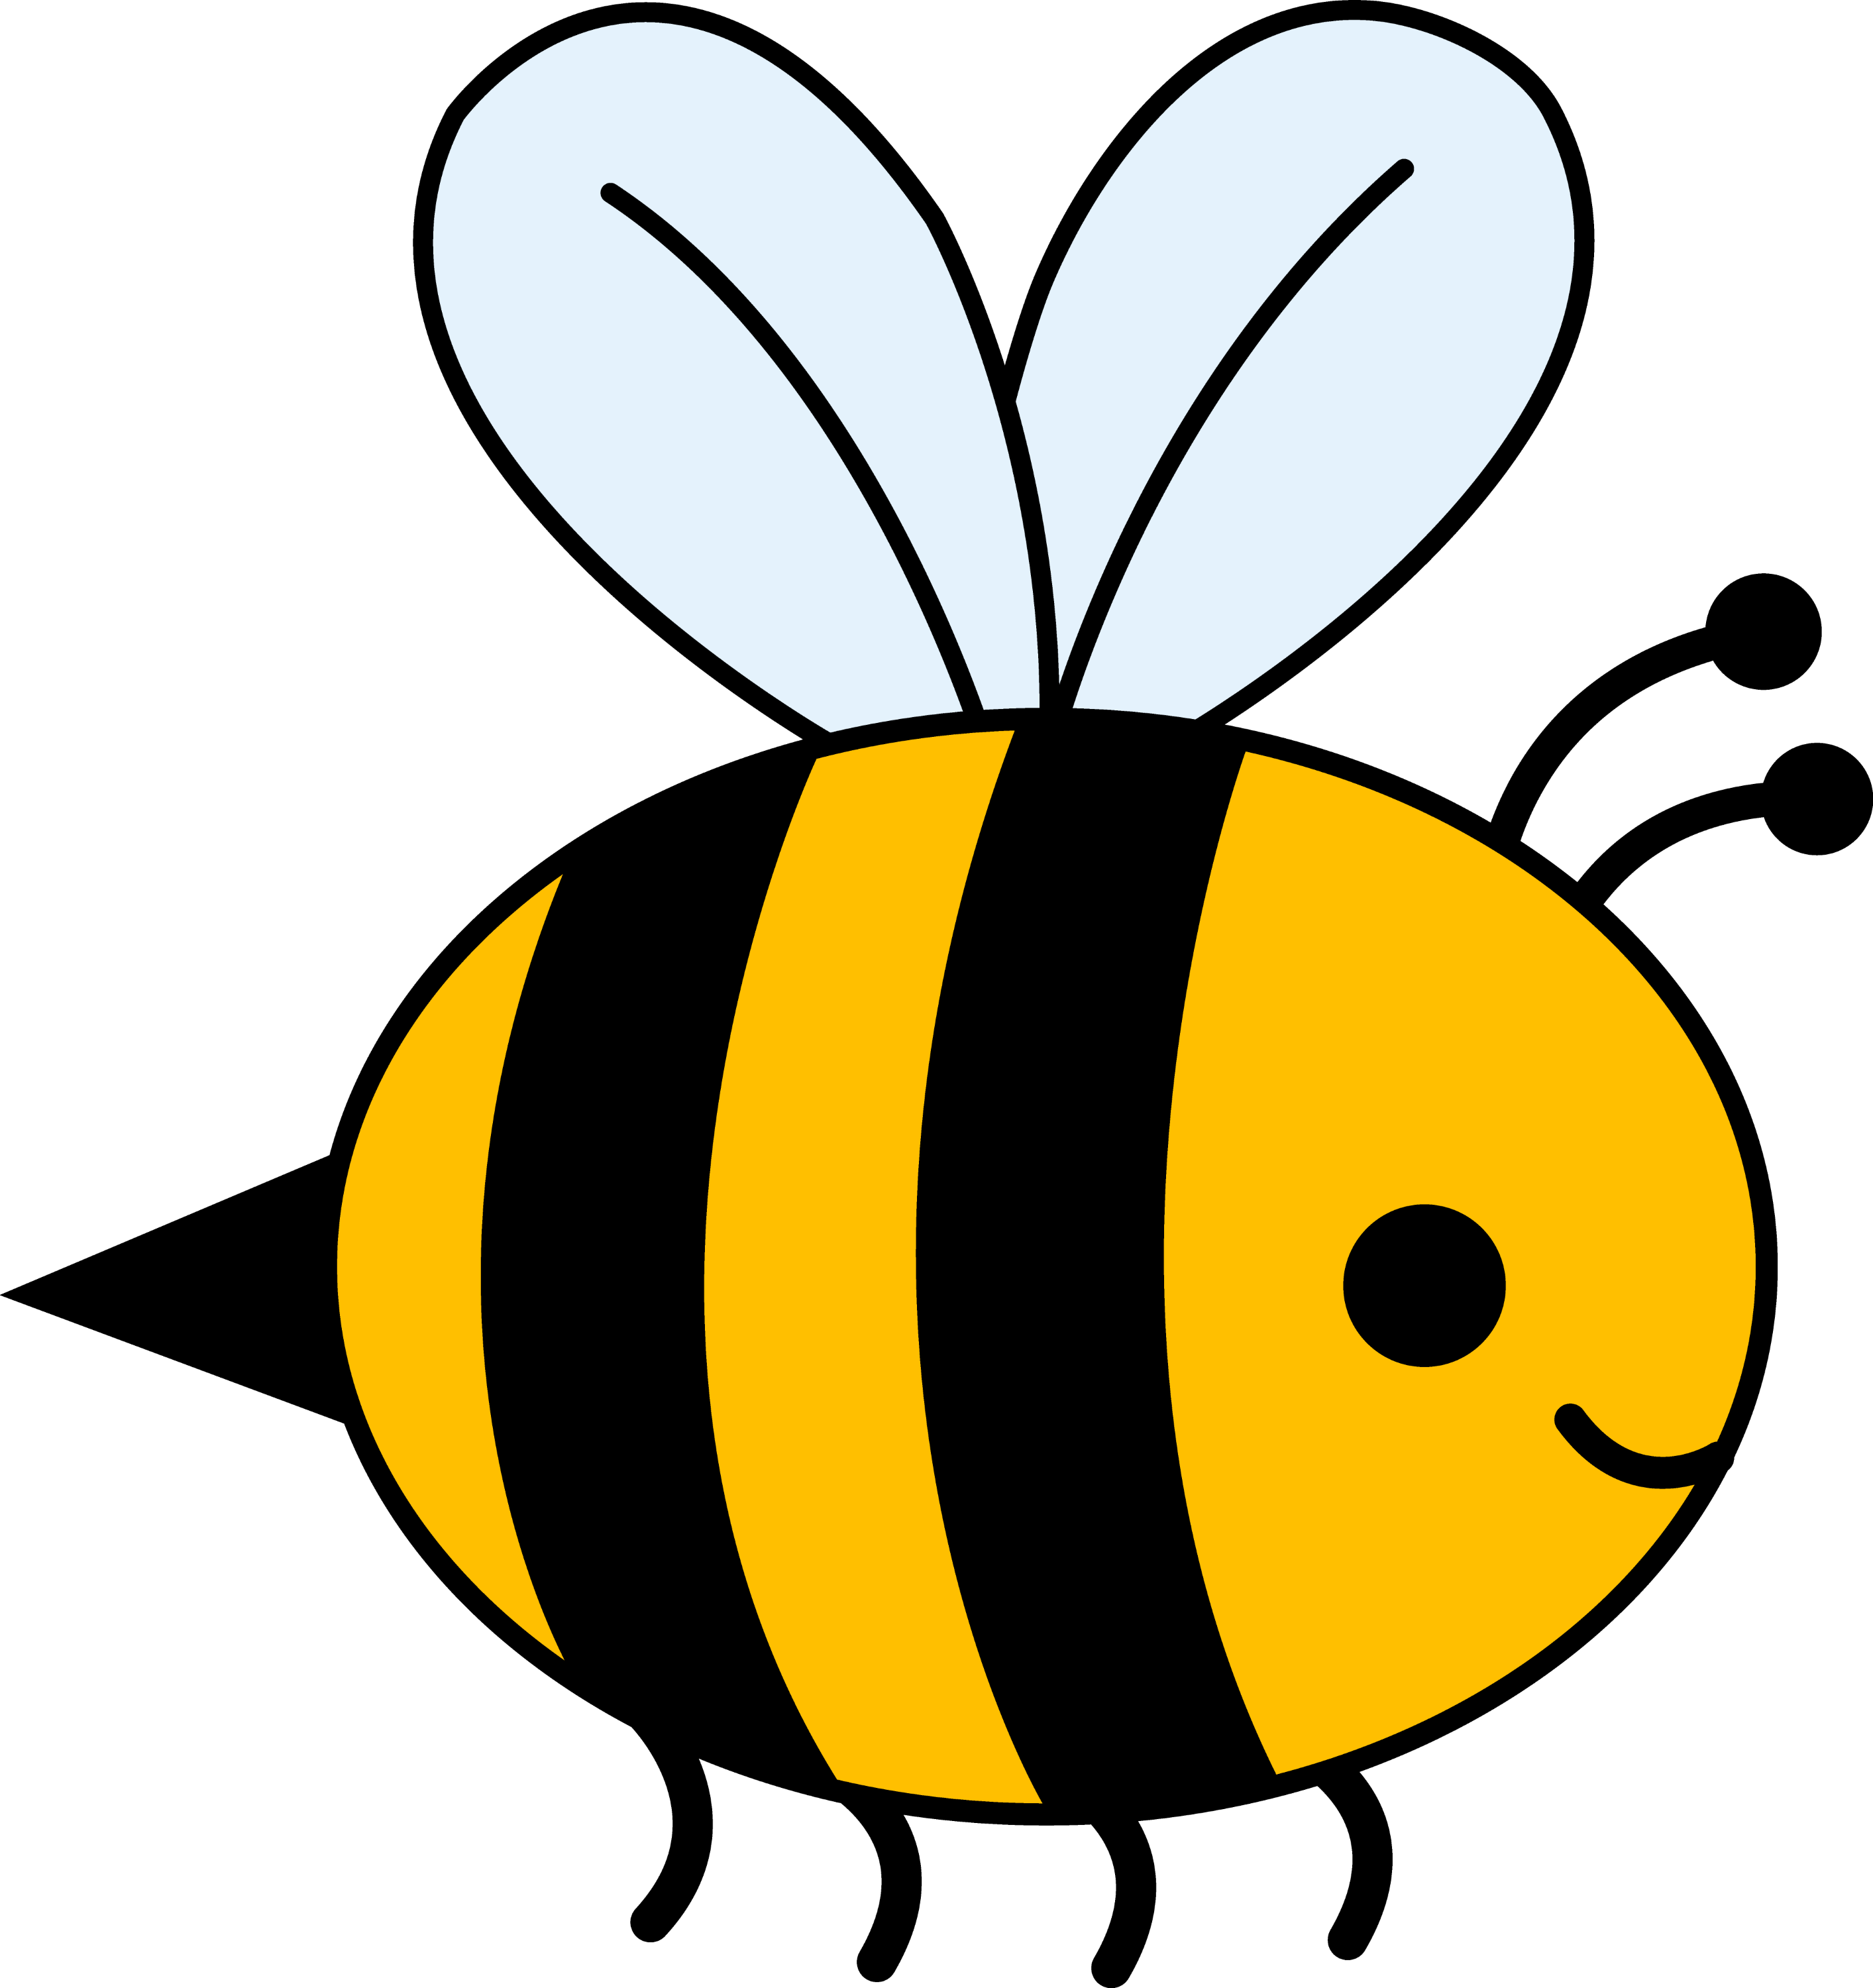 bumble bee clip art images - photo #5